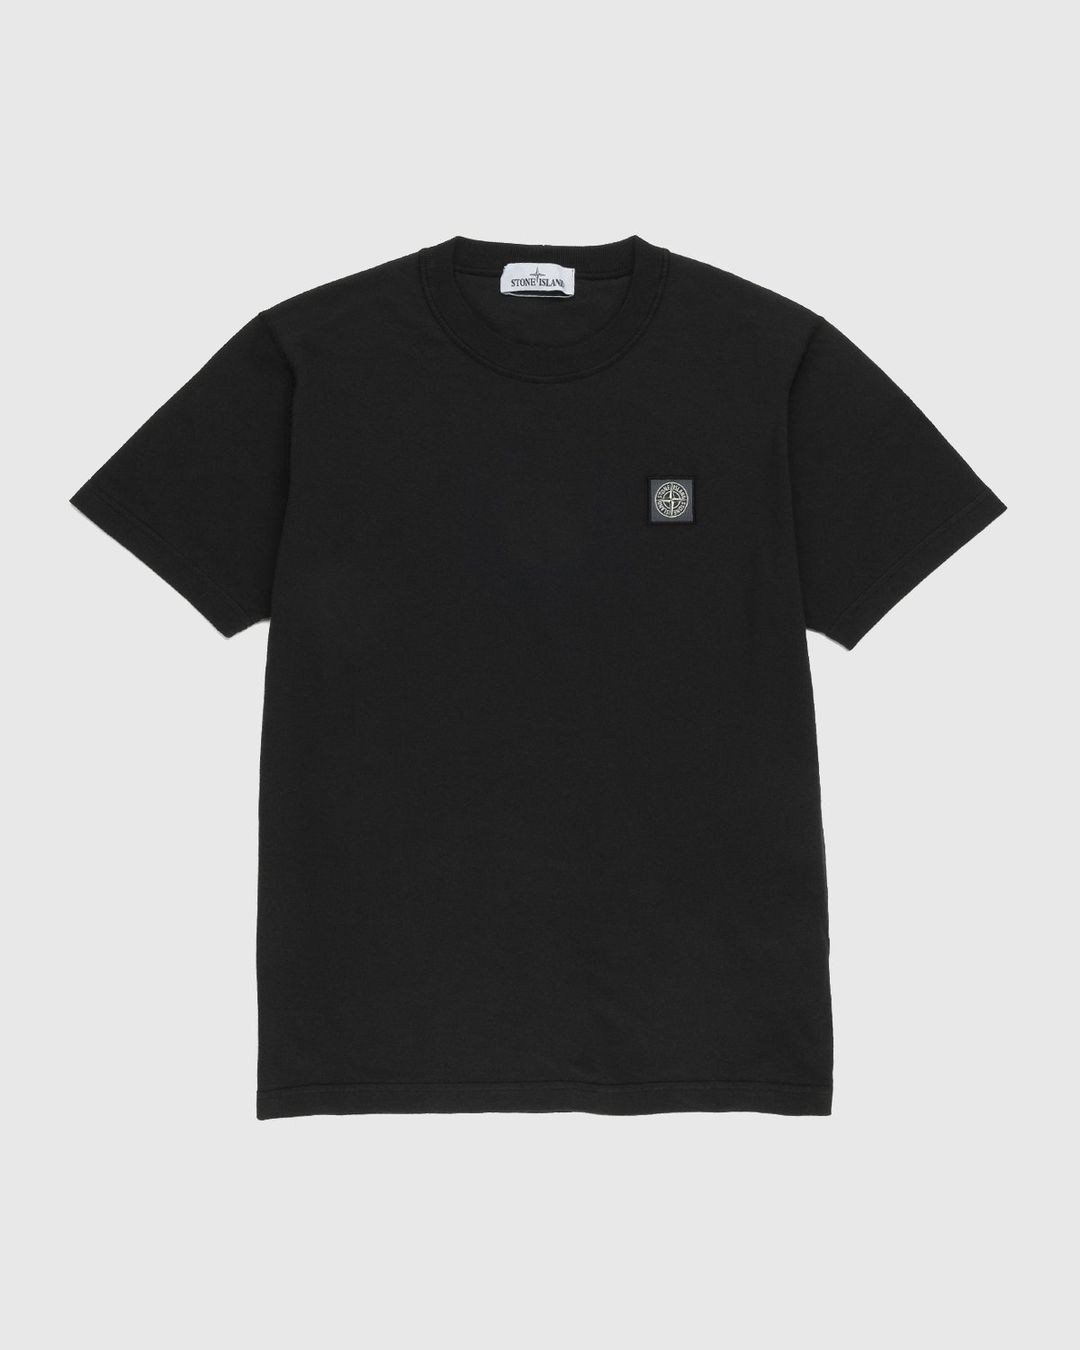 Stone Island – 23757 Garment-Dyed Fissato T-Shirt Black | Highsnobiety Shop